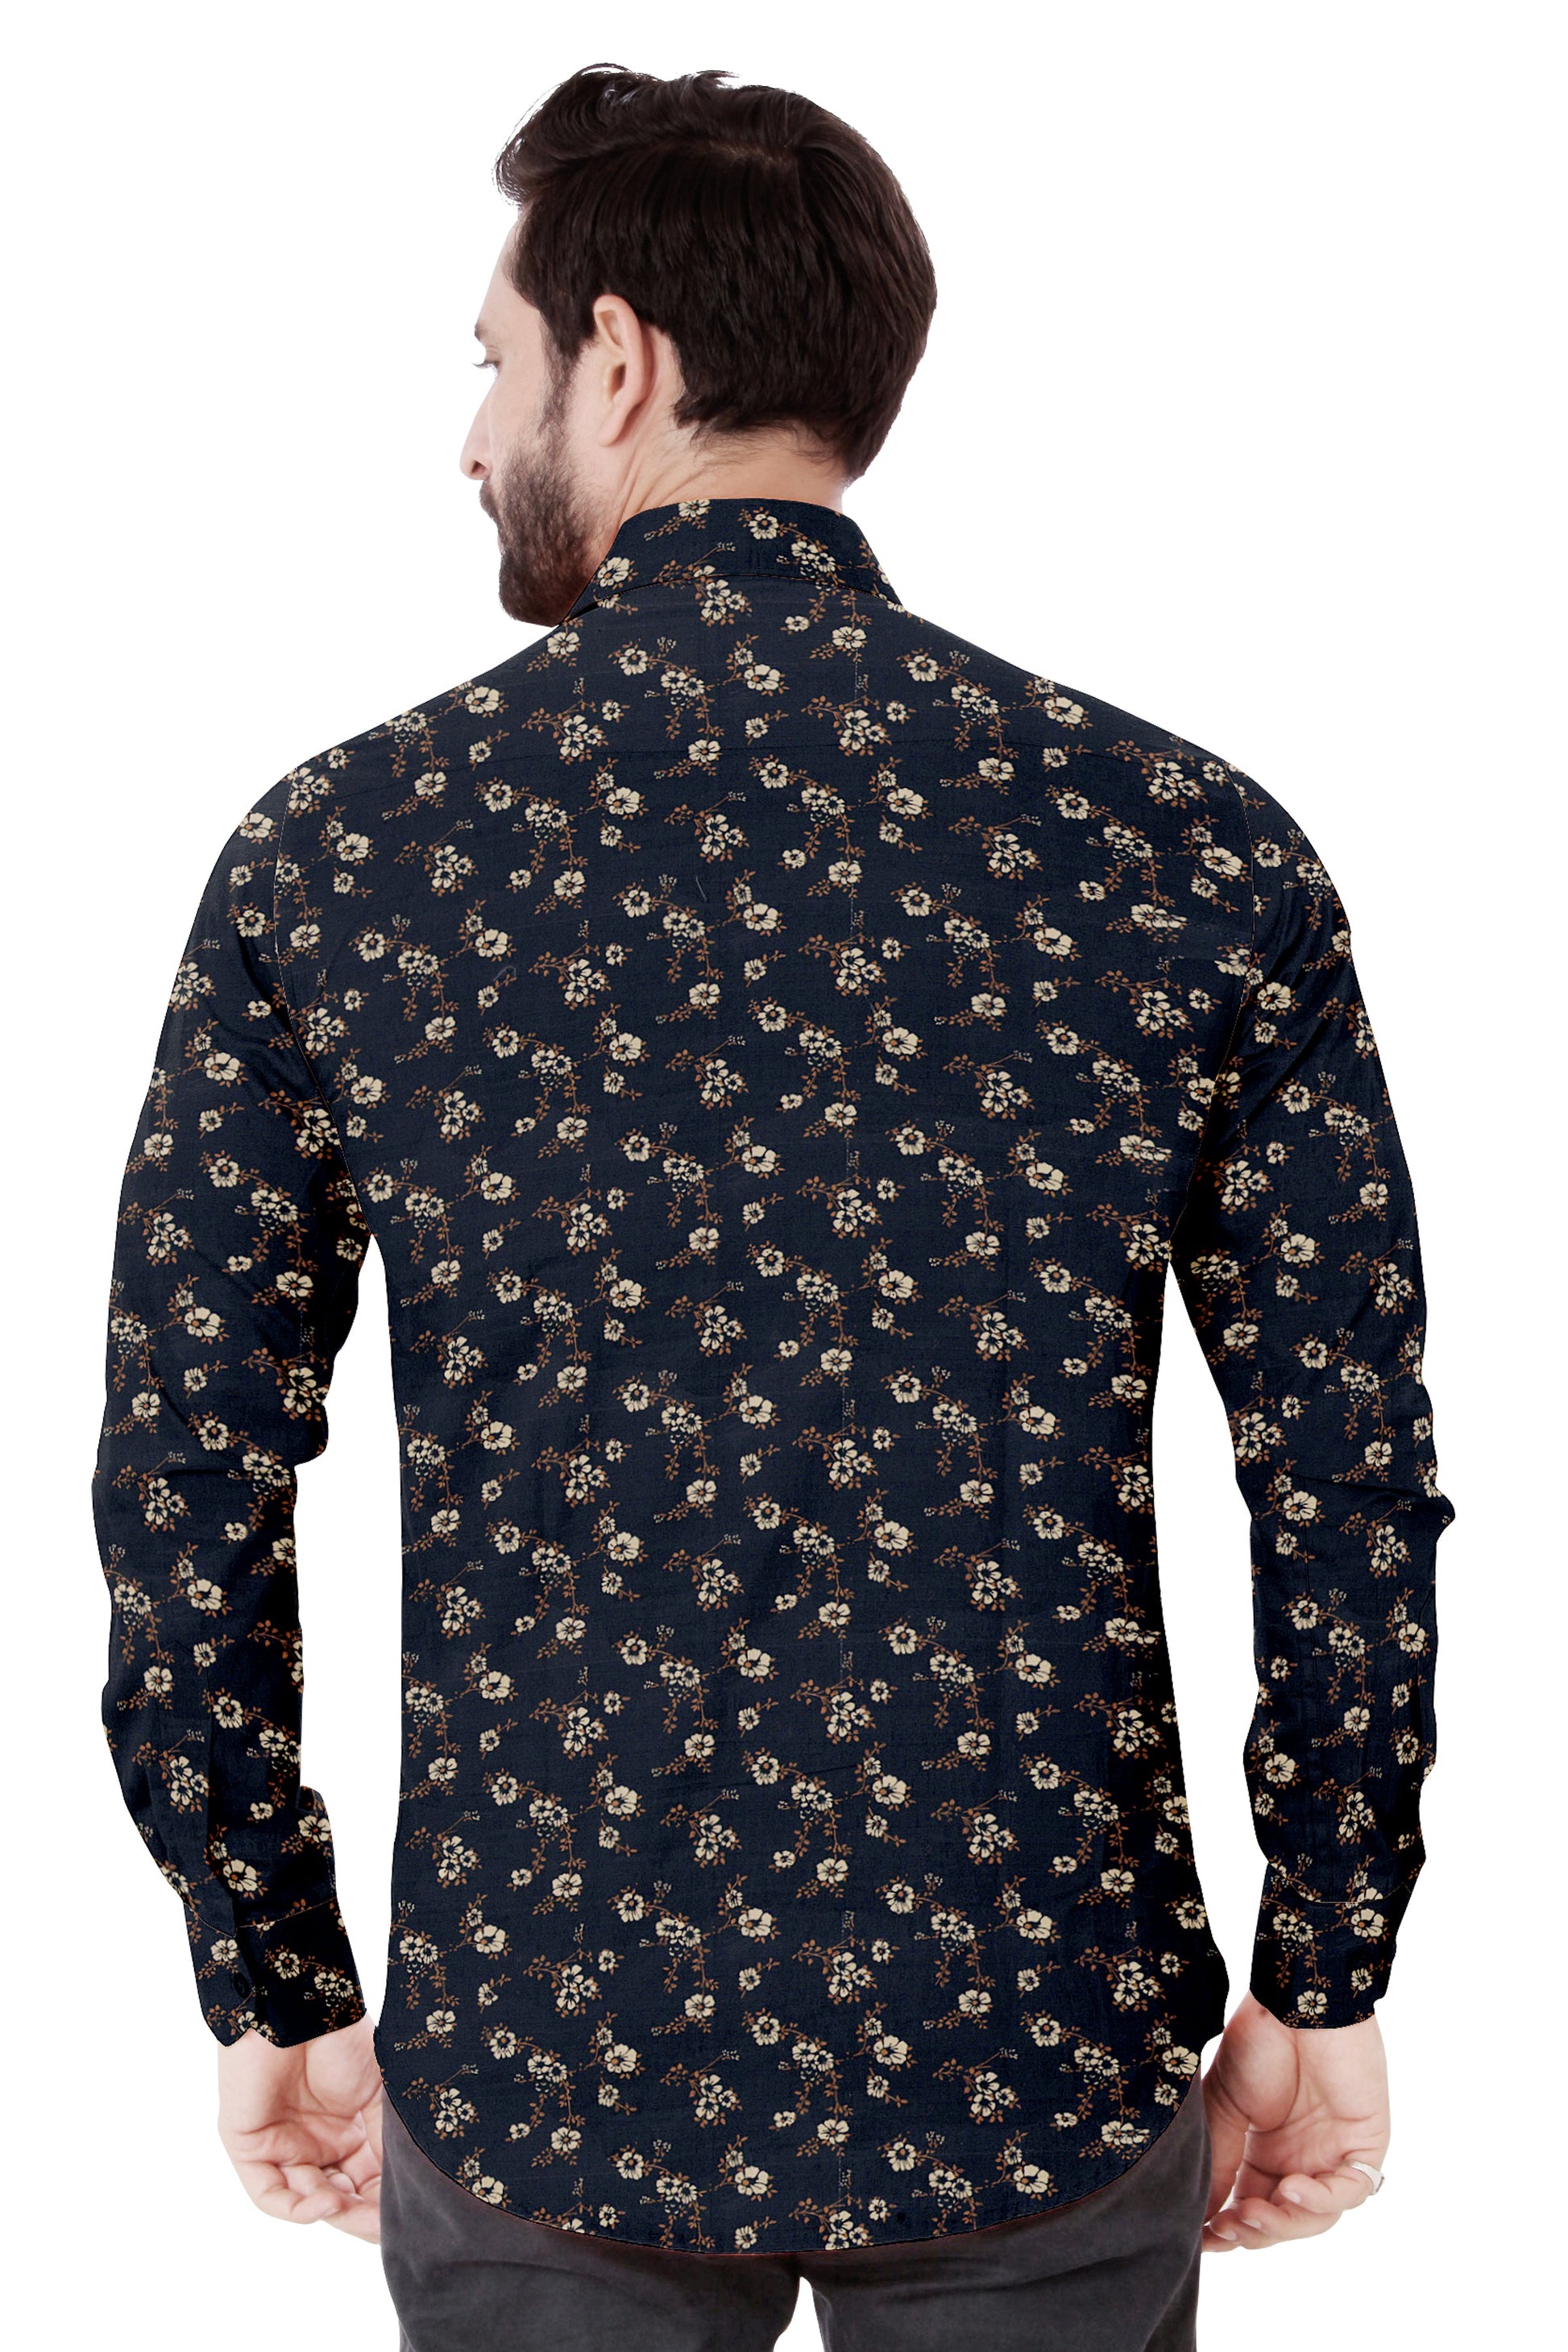 Men's Dark Black Flower Casual Shirt Full Sleeves 100% Cotton - Styleflea